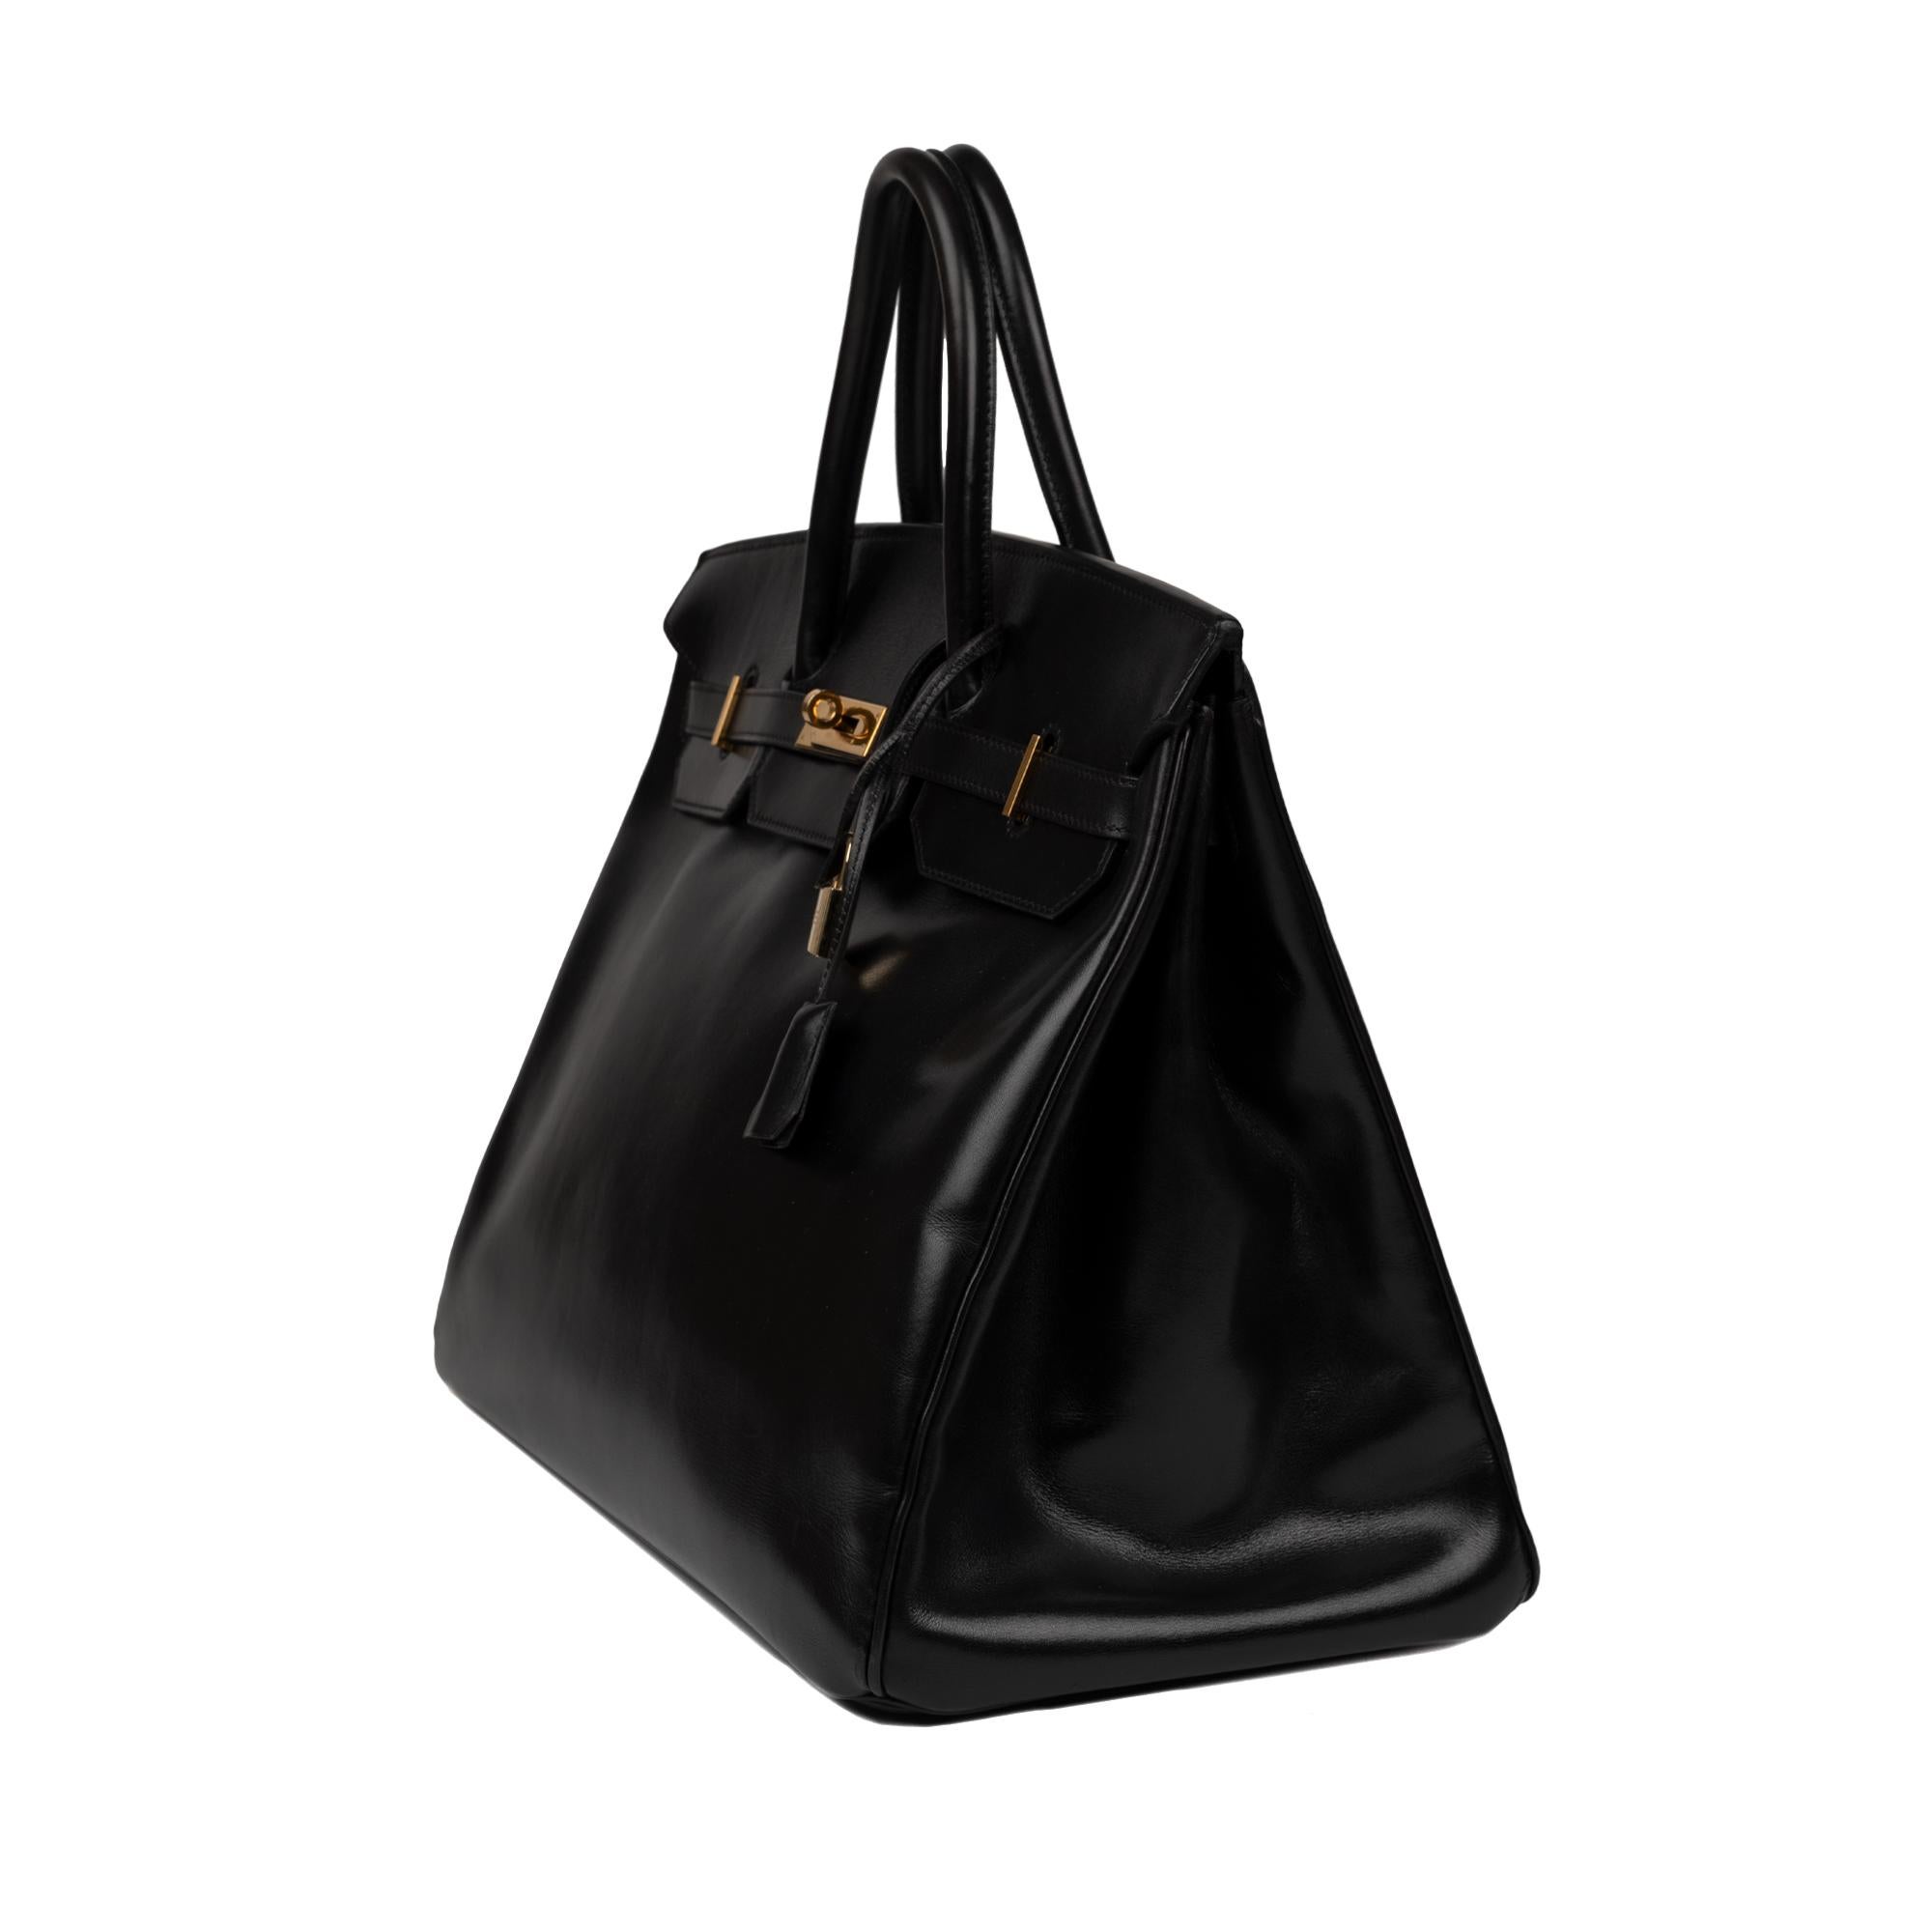 Hermes Birkin 40cm Black Box Leather Handbag 2